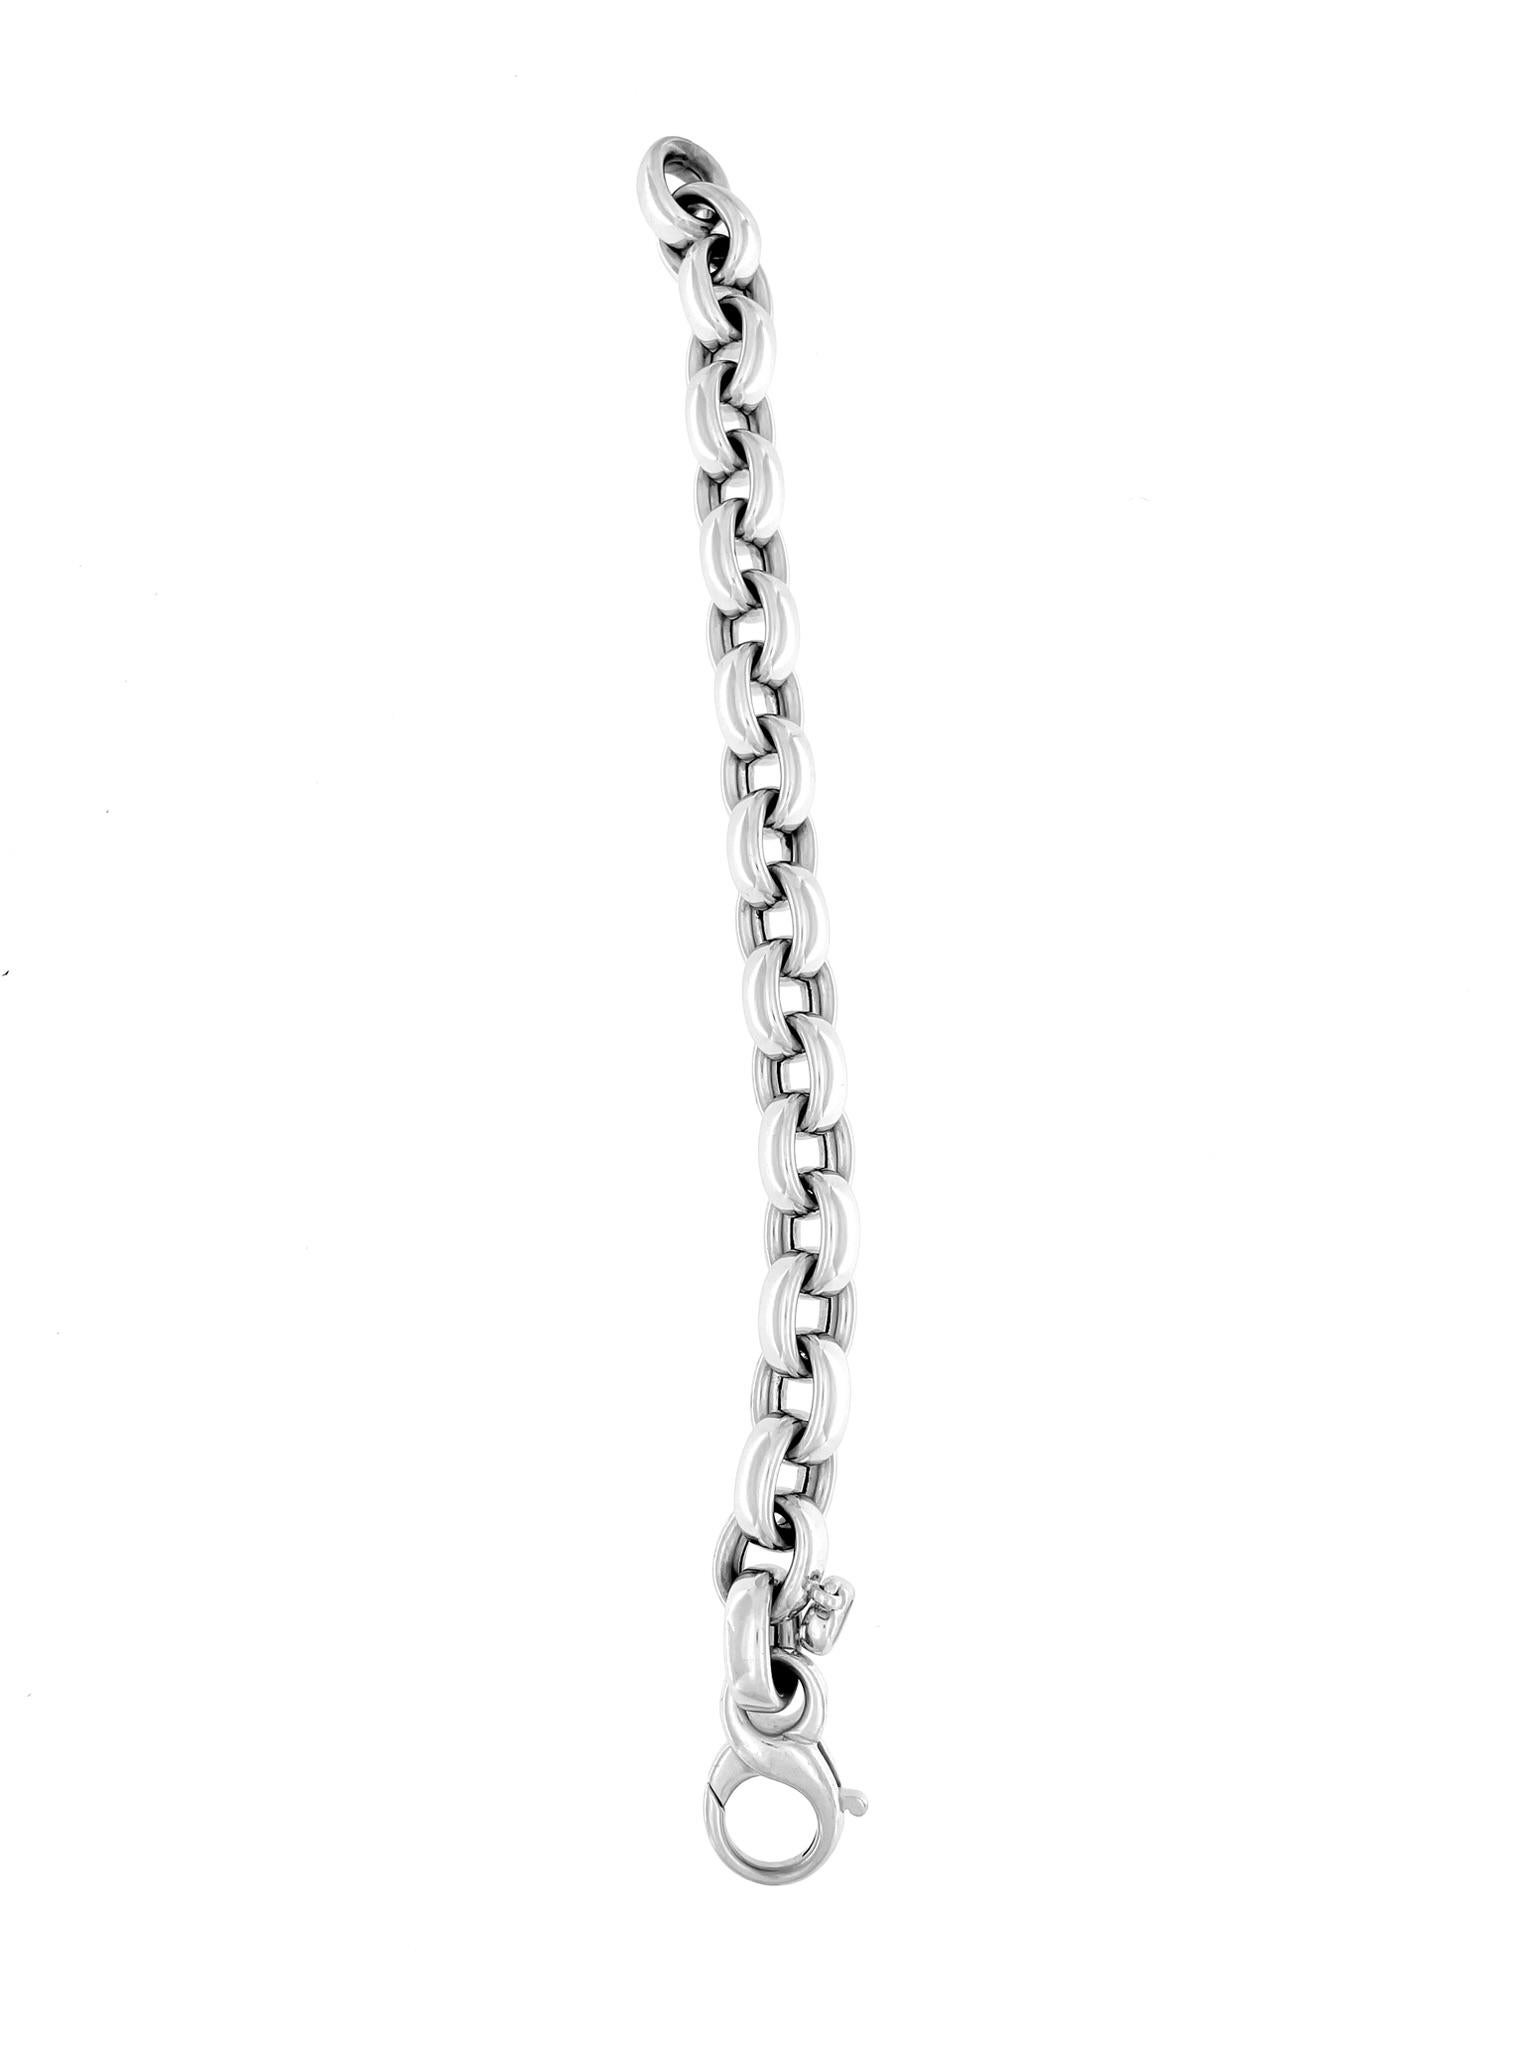 The Chopard Bracelet 